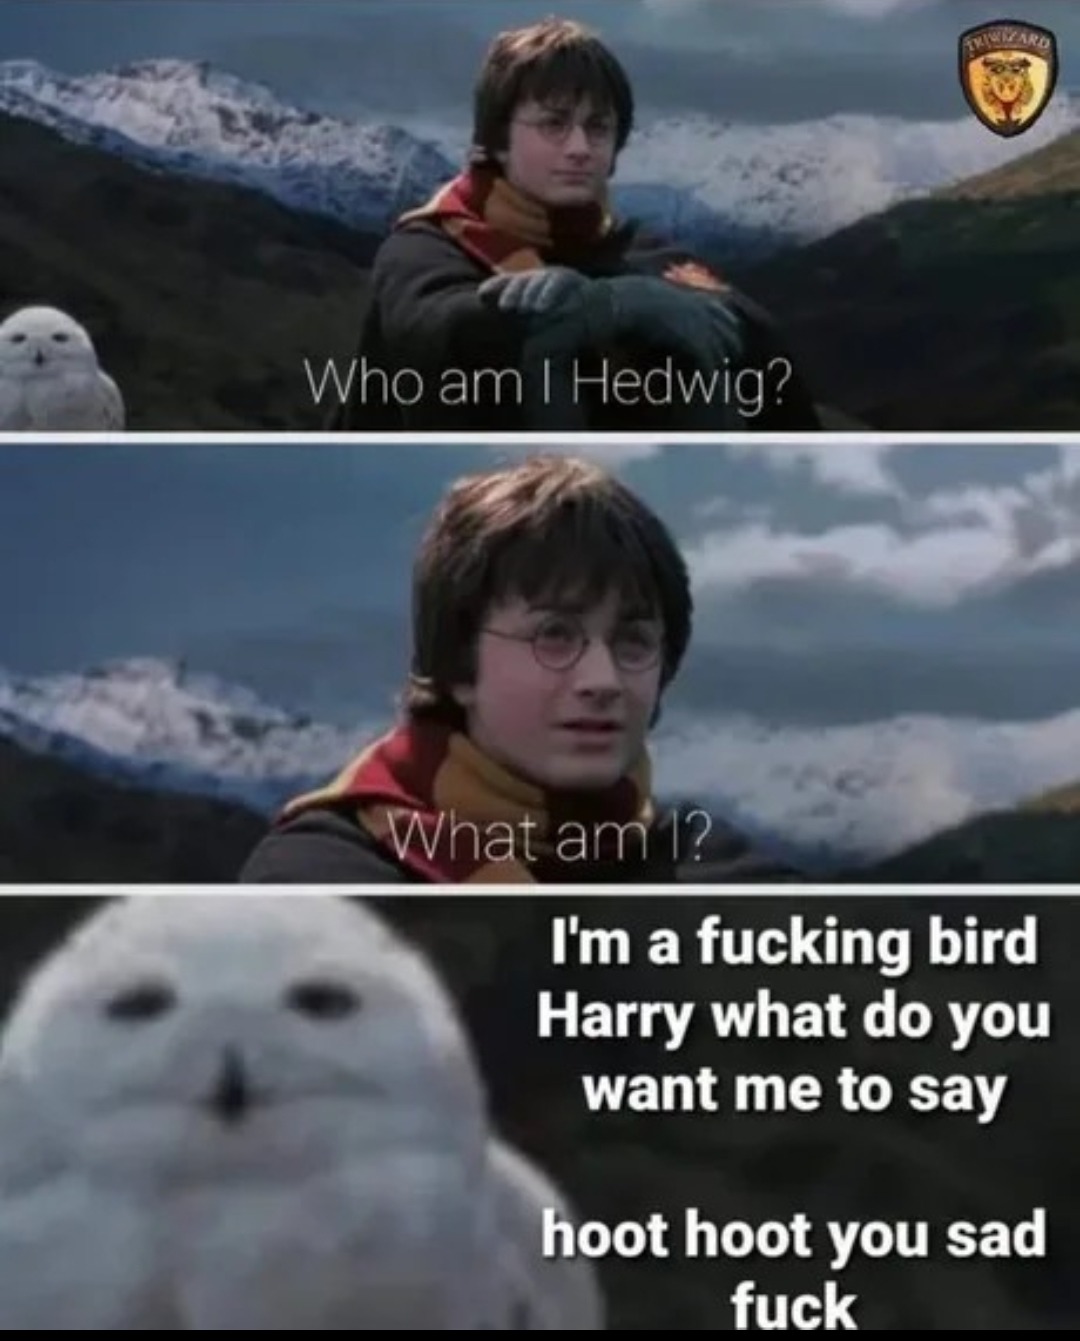 The best Potter memes :) Memedroid